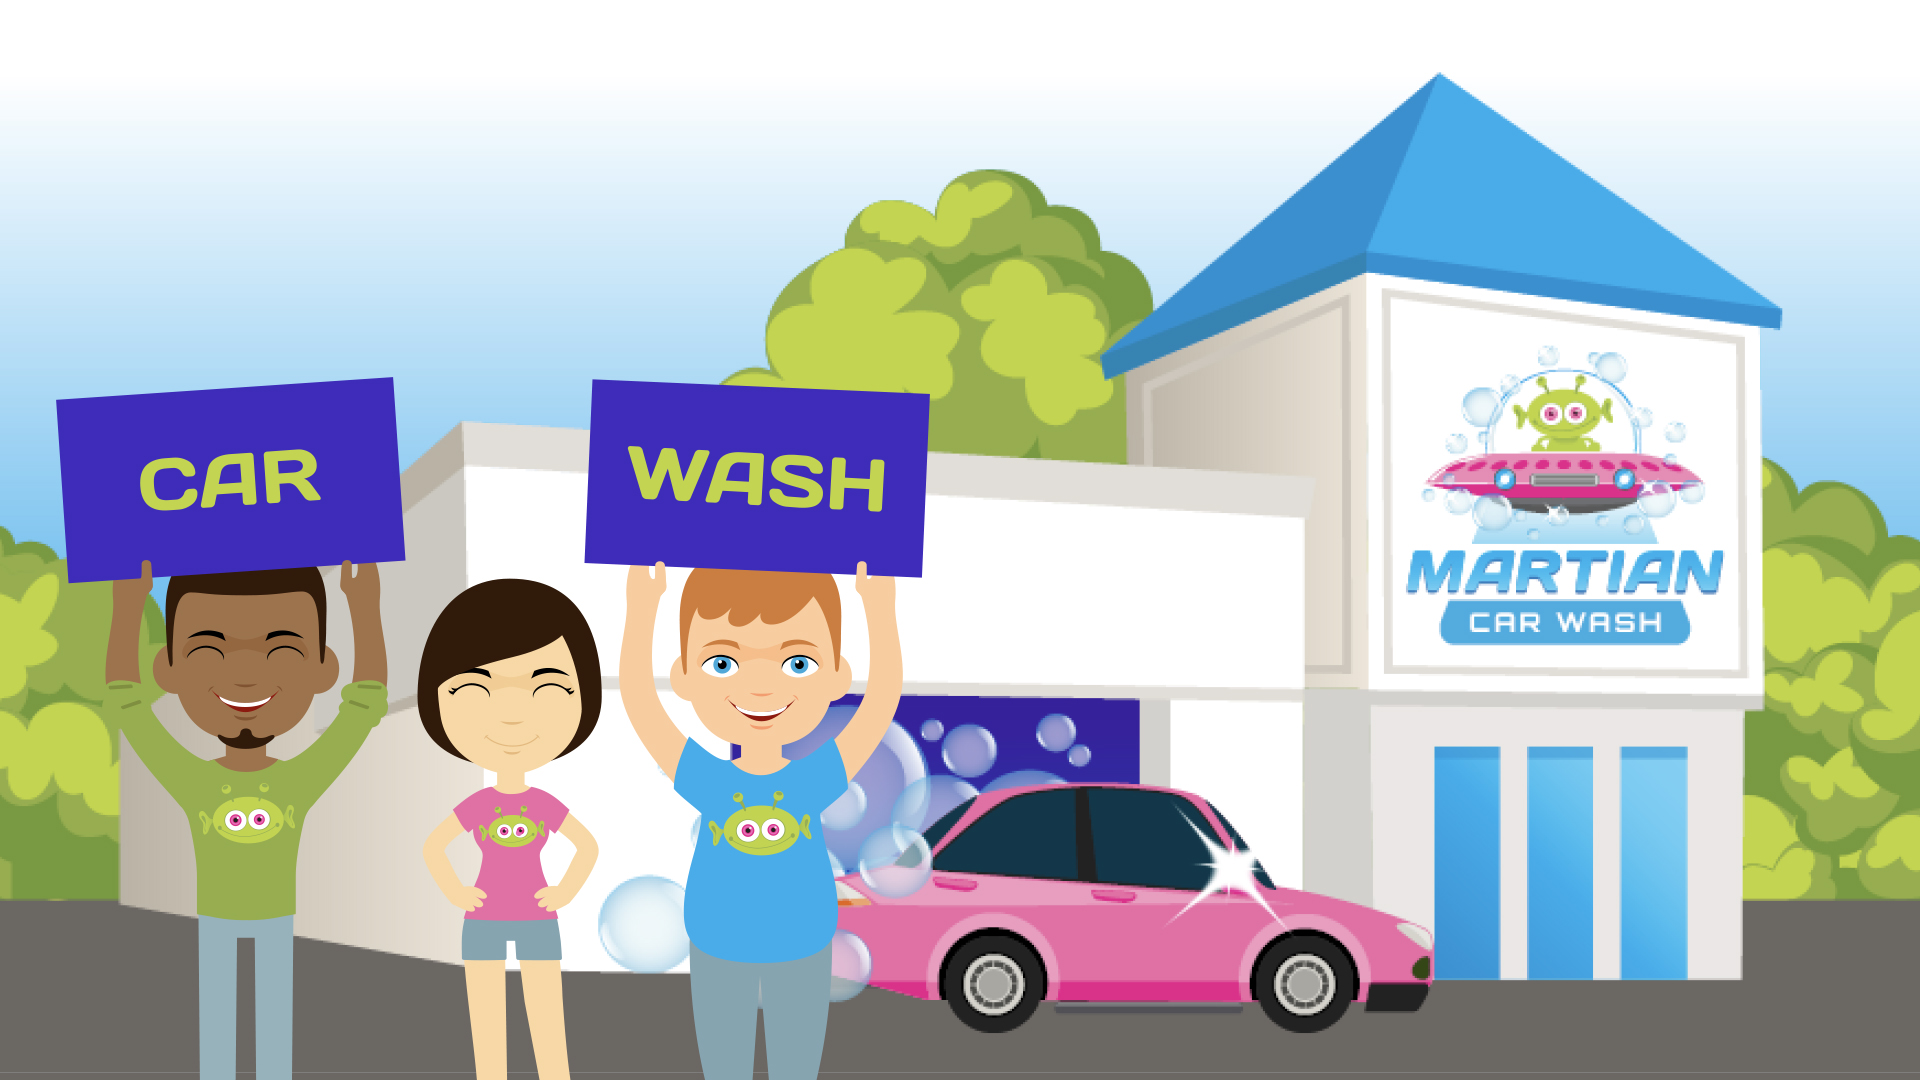 cartoon branding of martian car wash